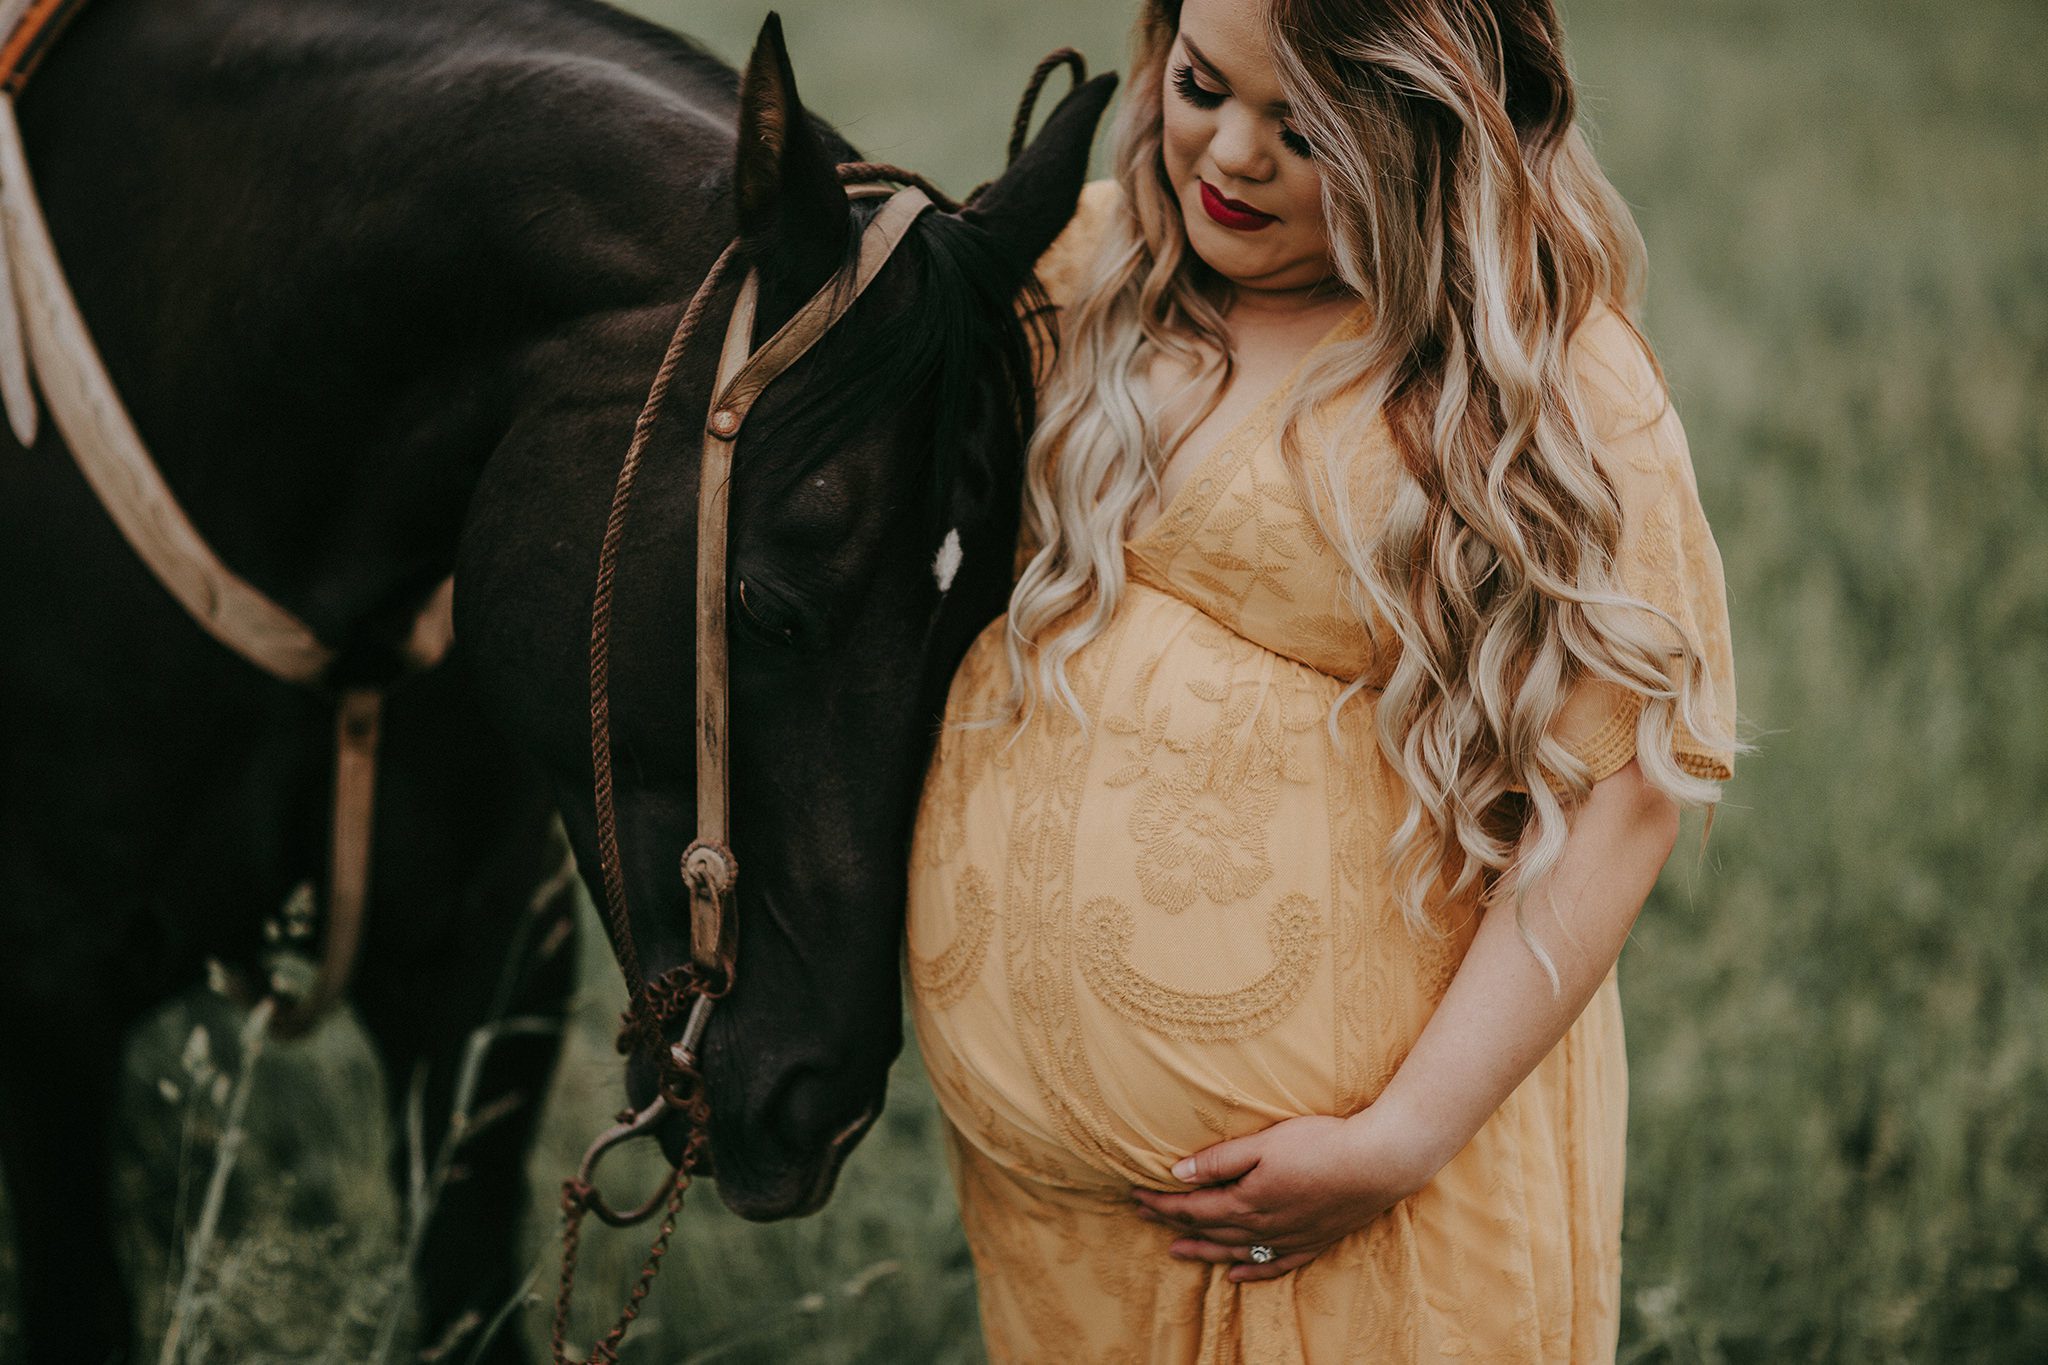 Kansas City Maternity Photographer